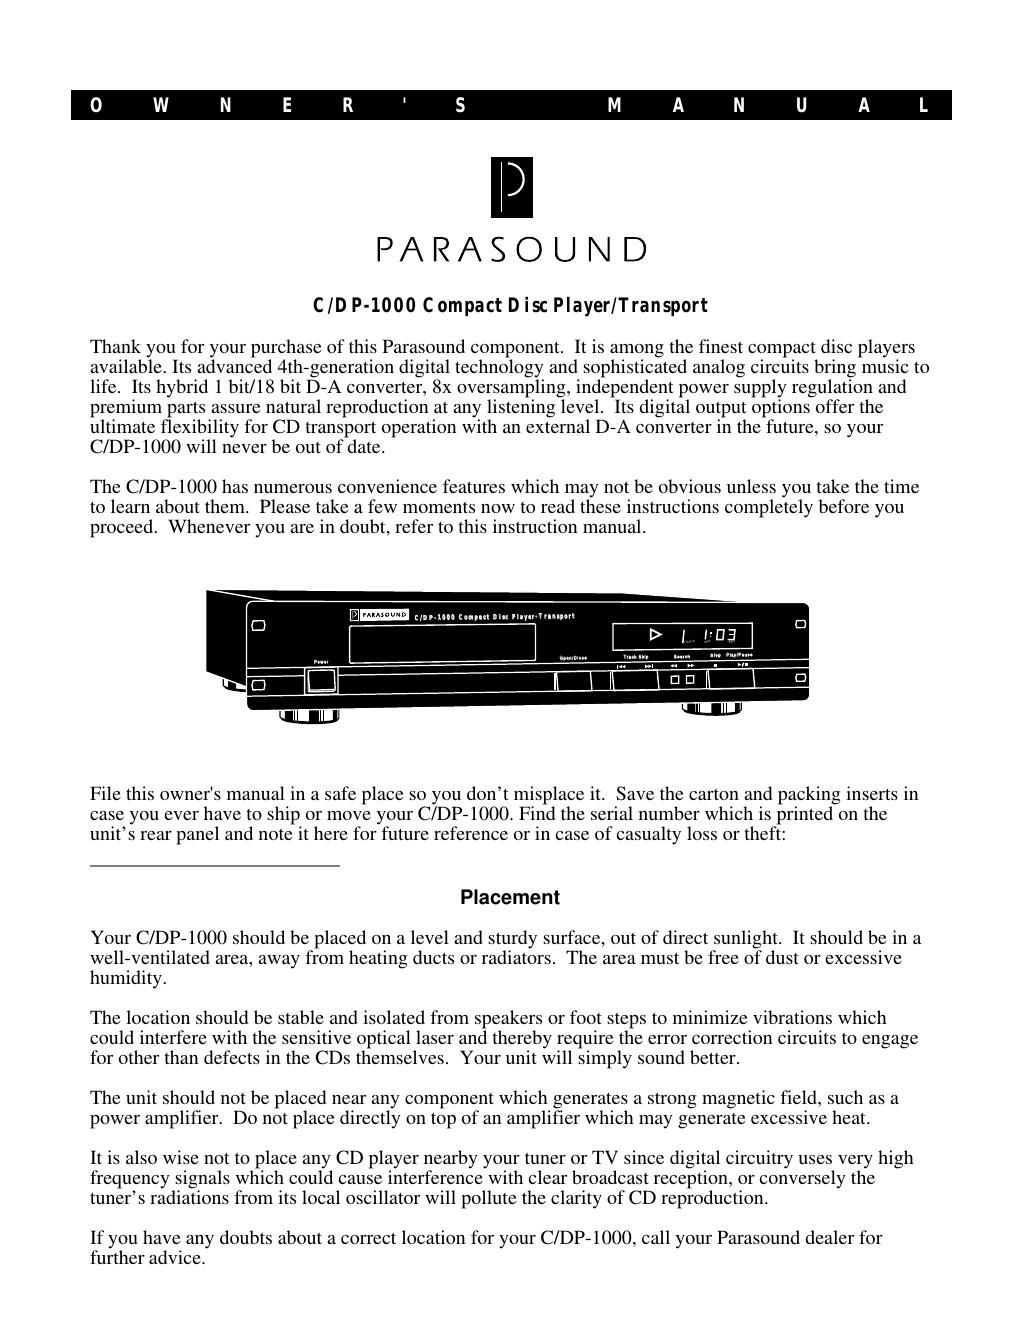 parasound cdp 1000 owners manual